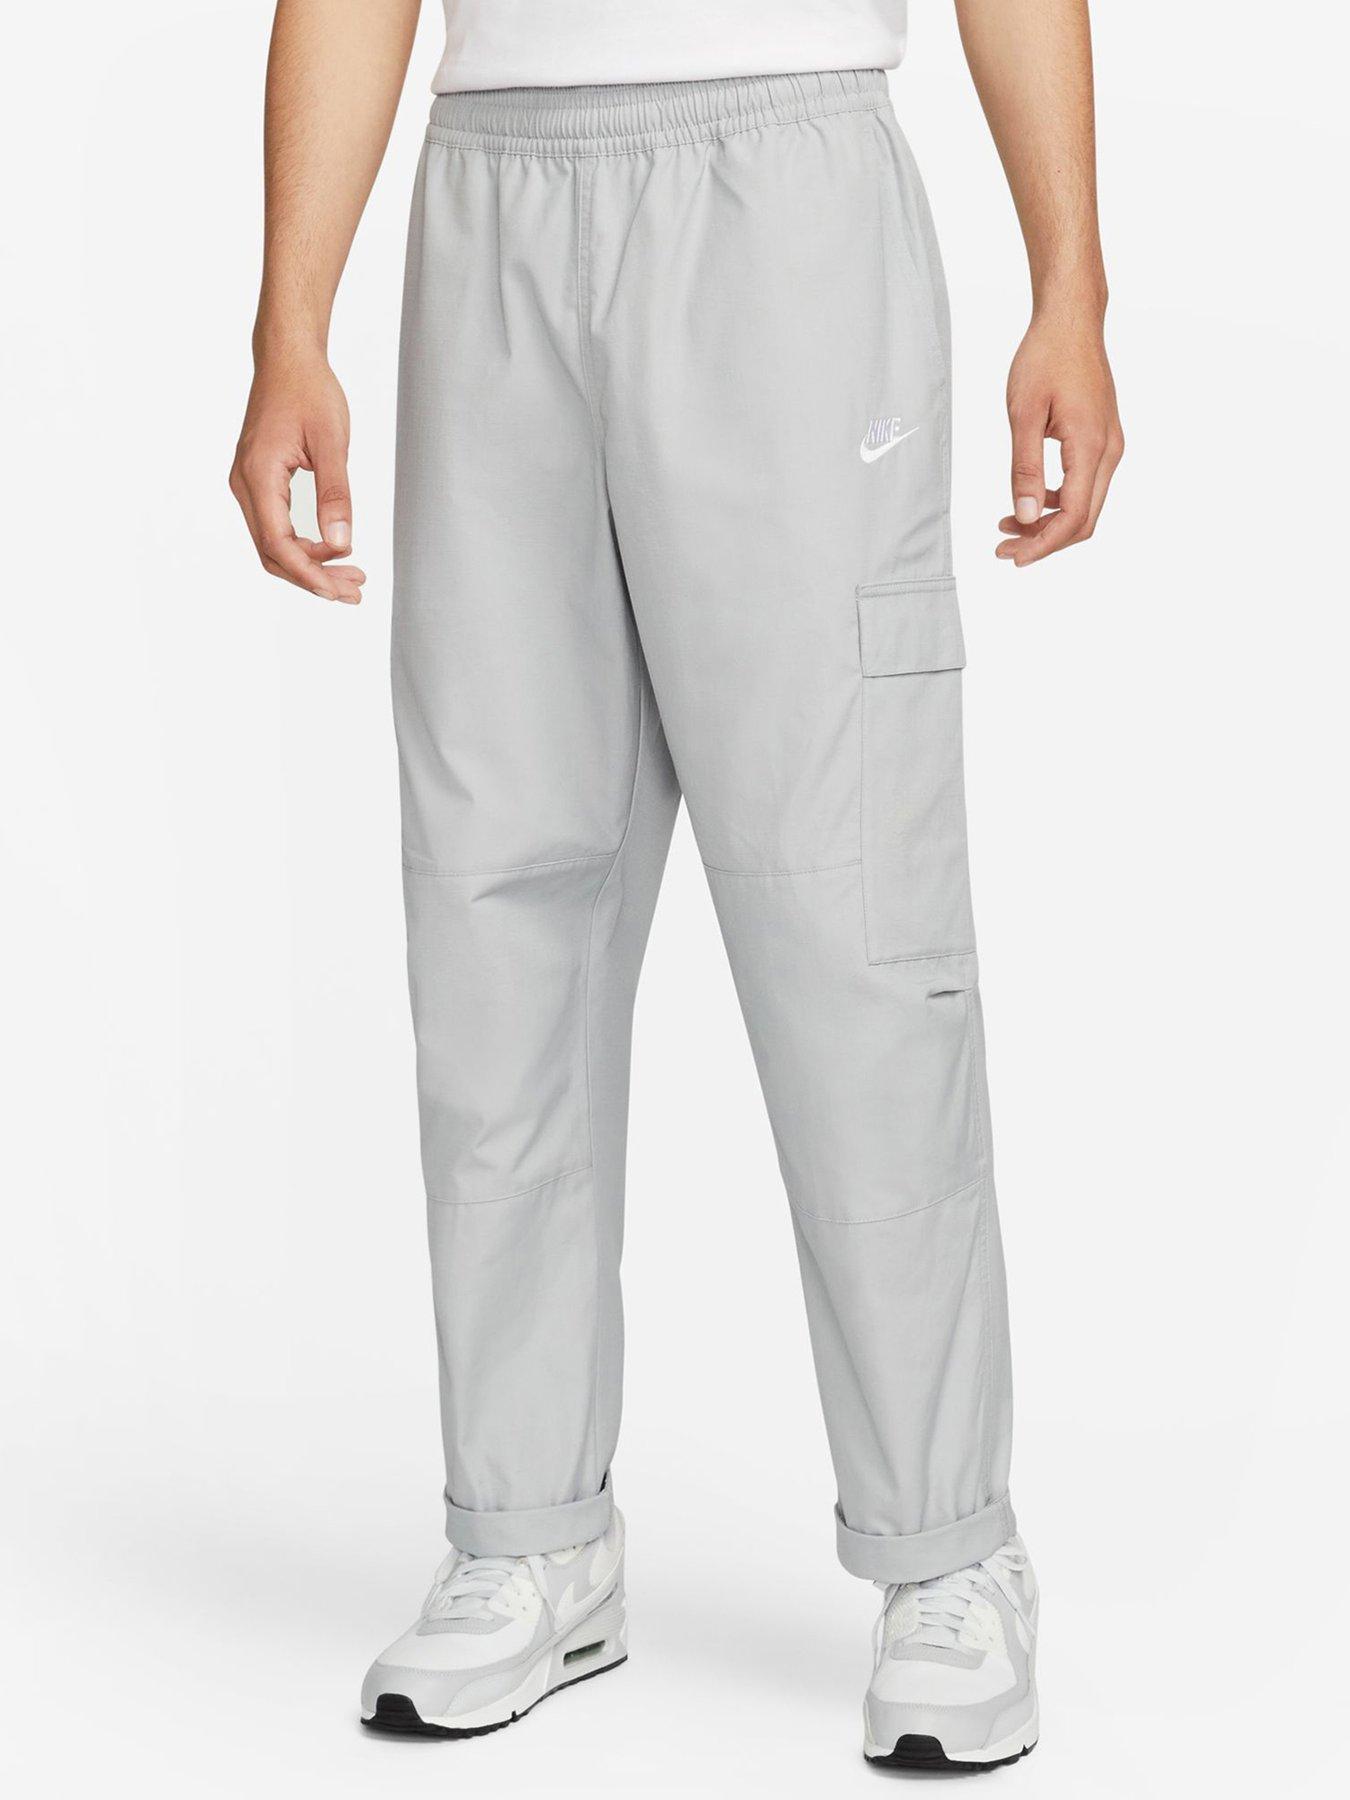 Nike Nsw Jogger Woven Core Street (black/white) Casual Pants for Men